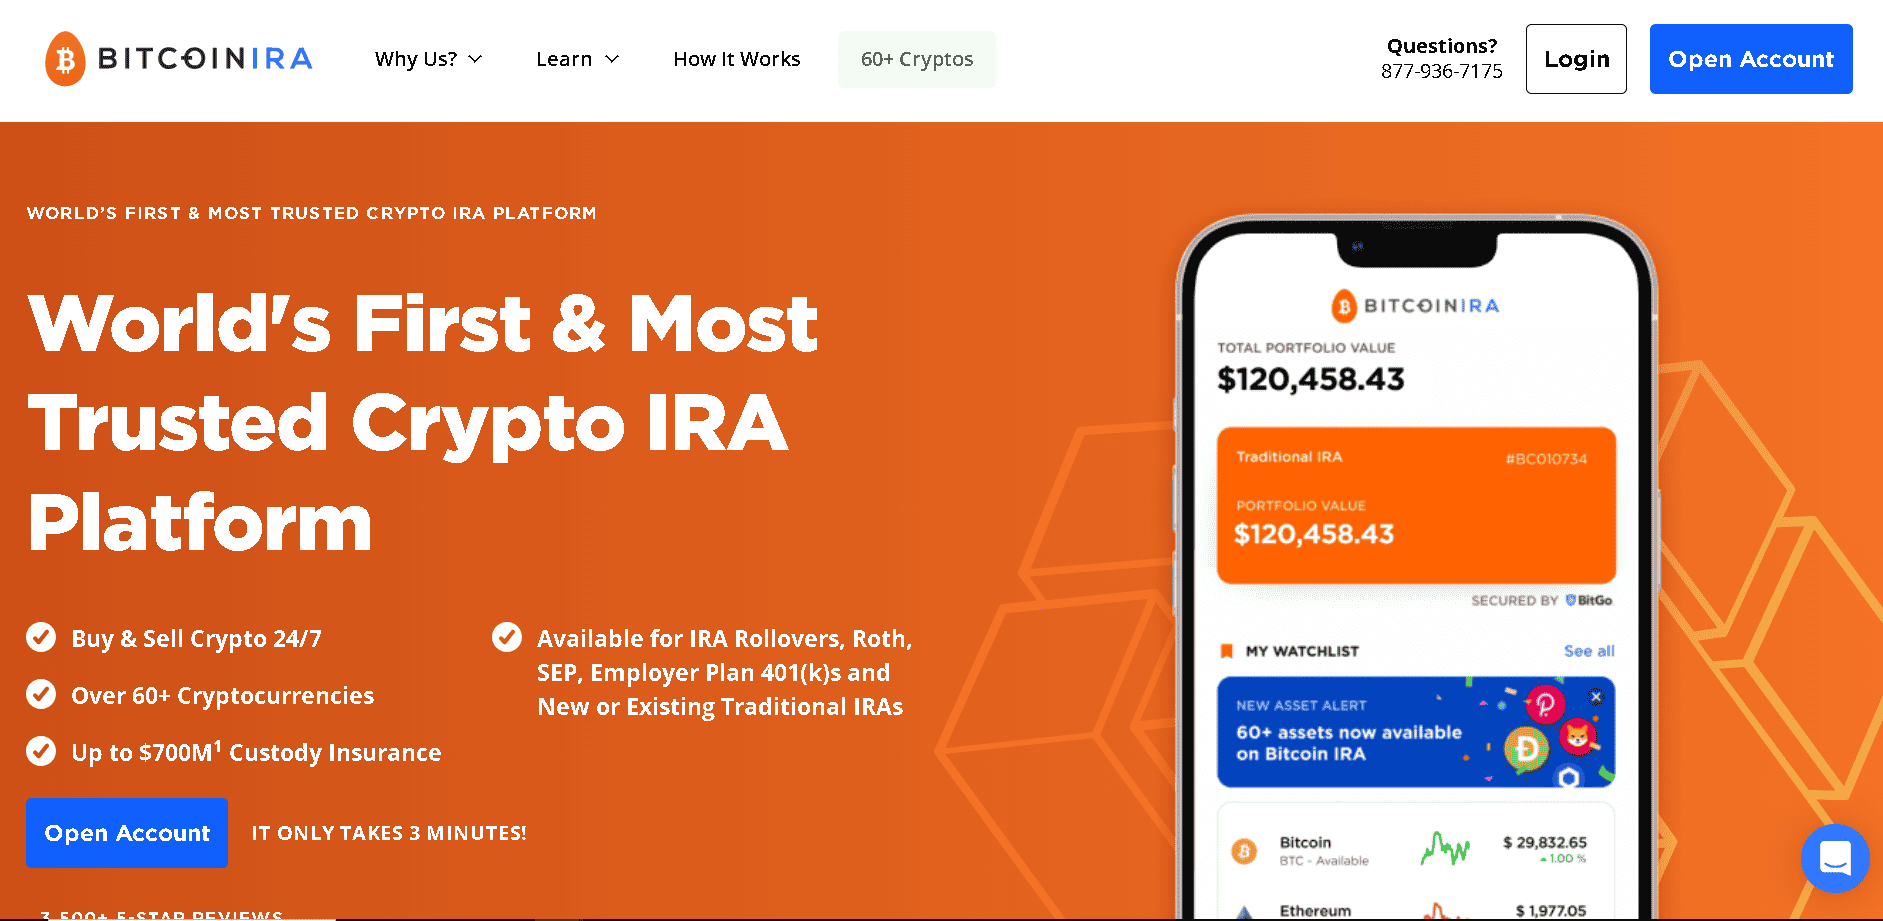 Bitcoin IRA sells bitcoin IRAs